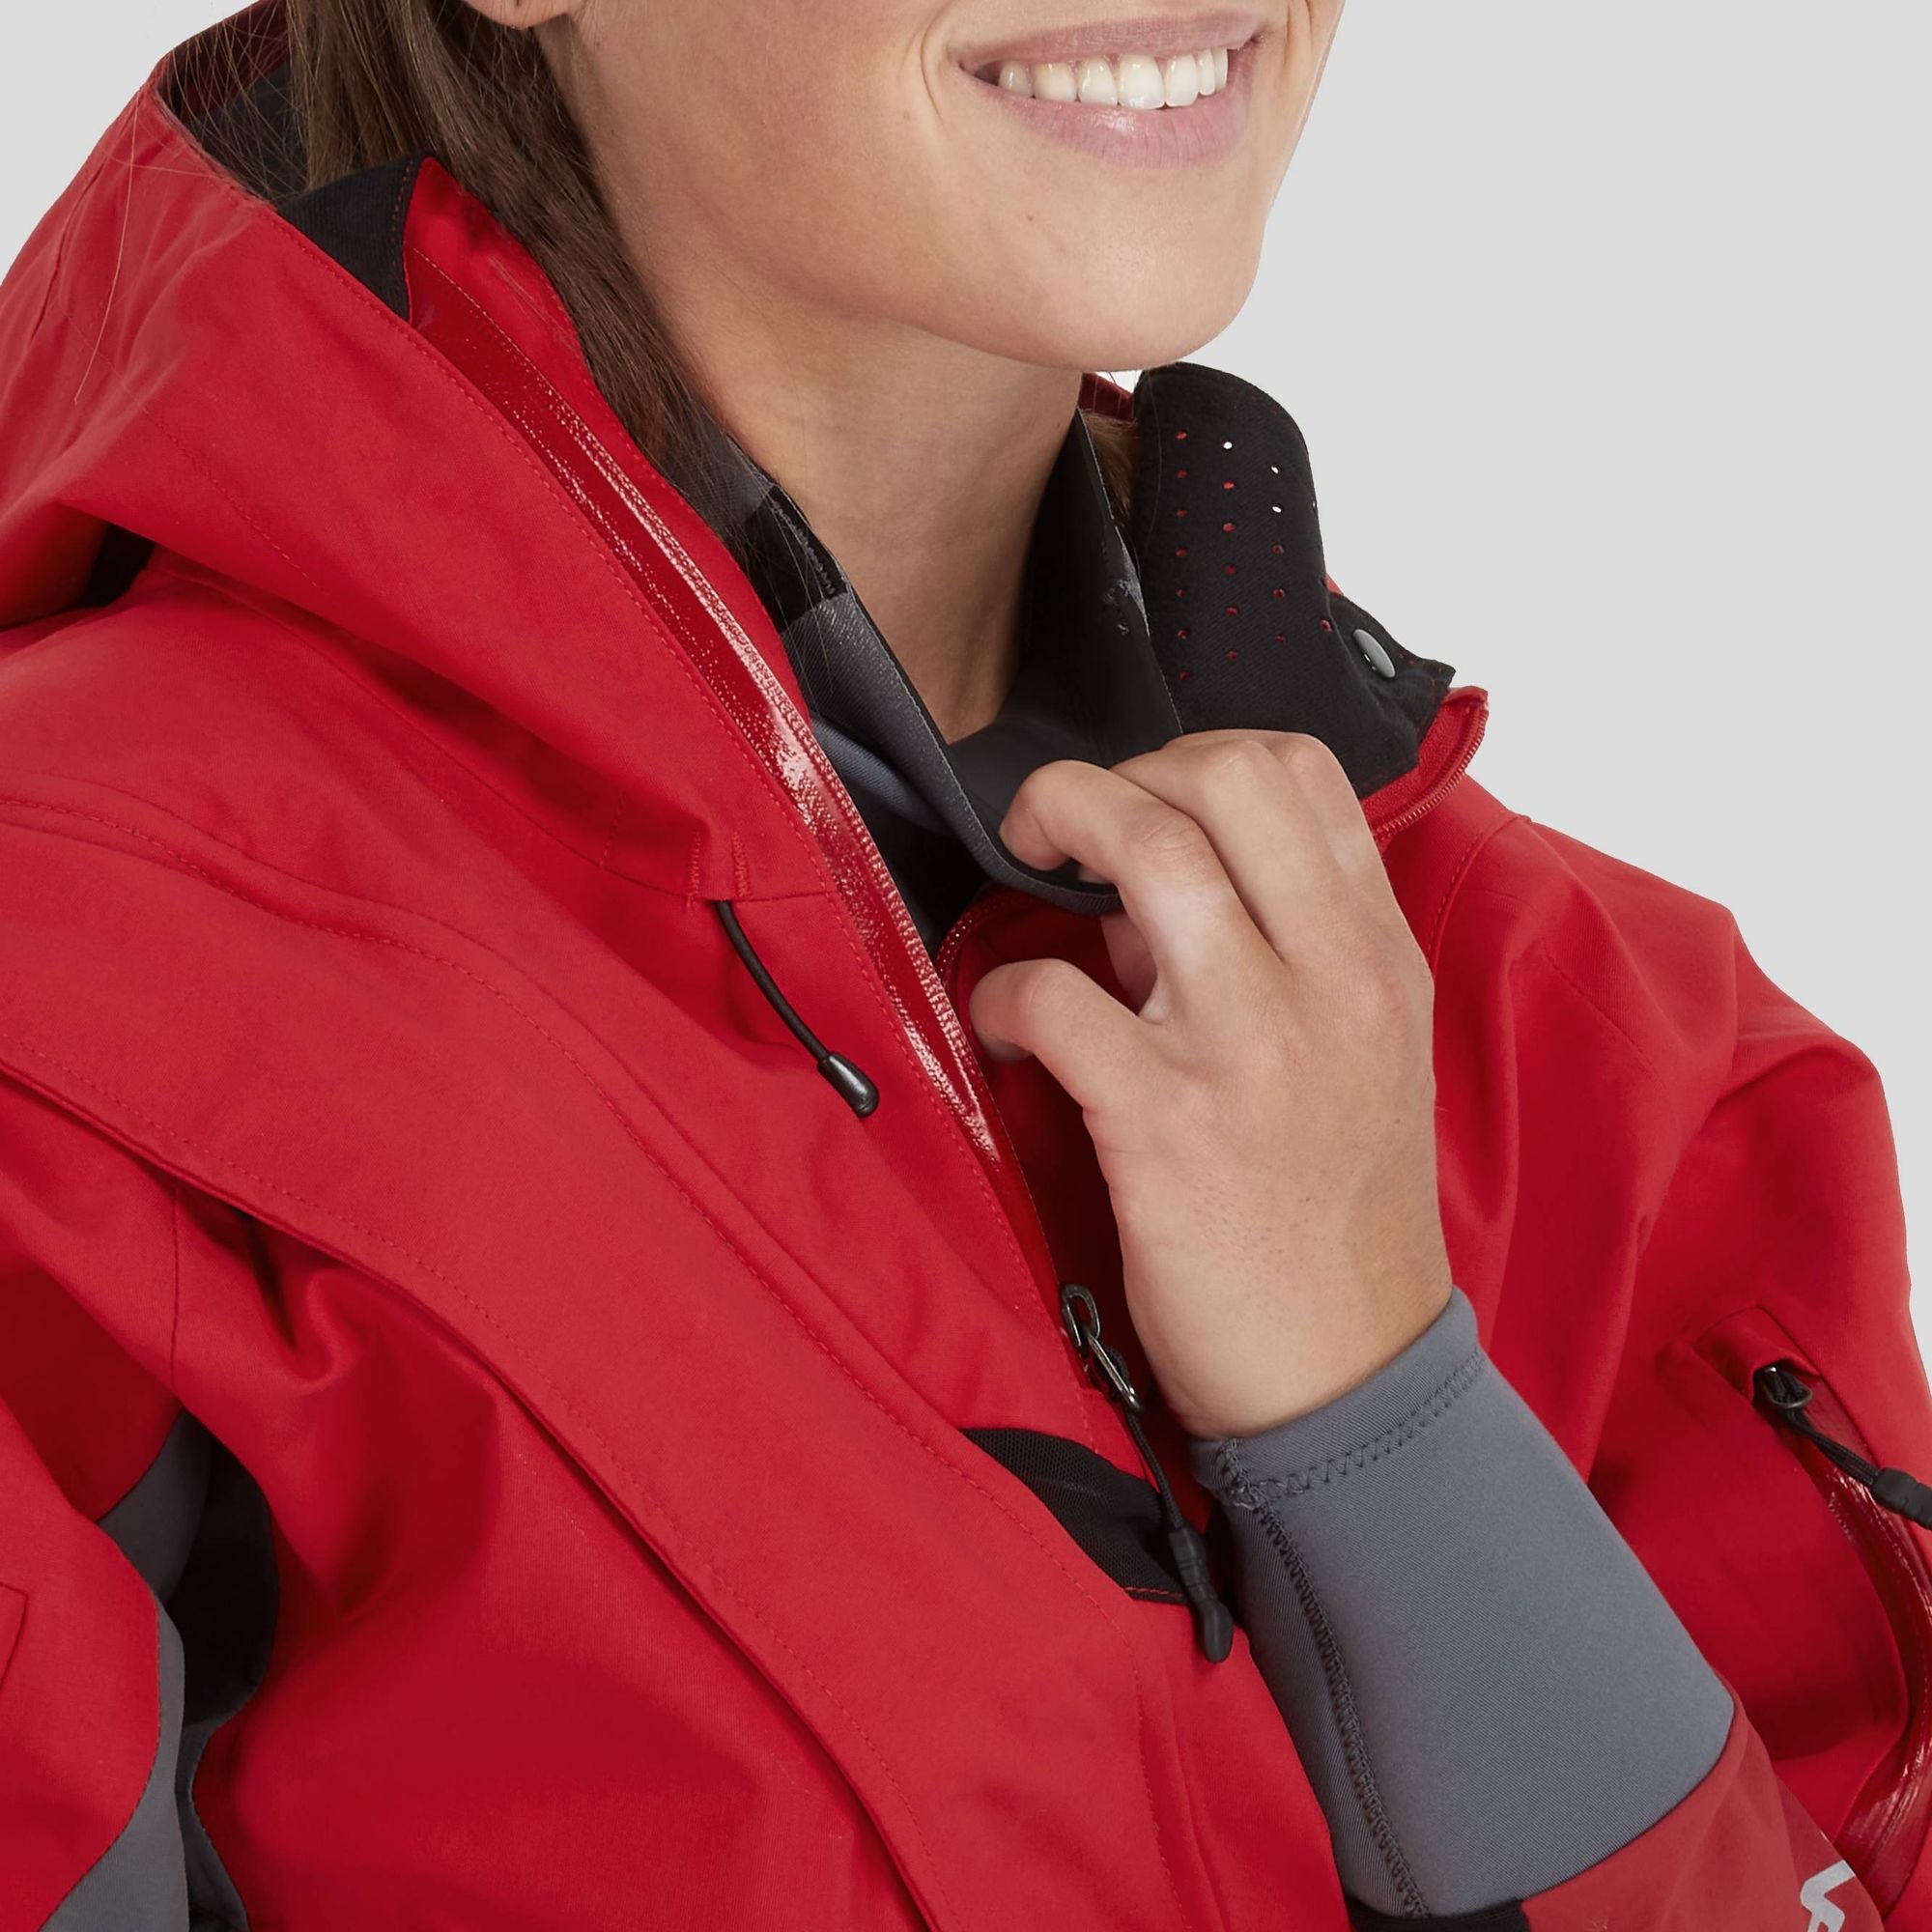 NRS - Women's Navigator GORE-TEX  Dry Suit